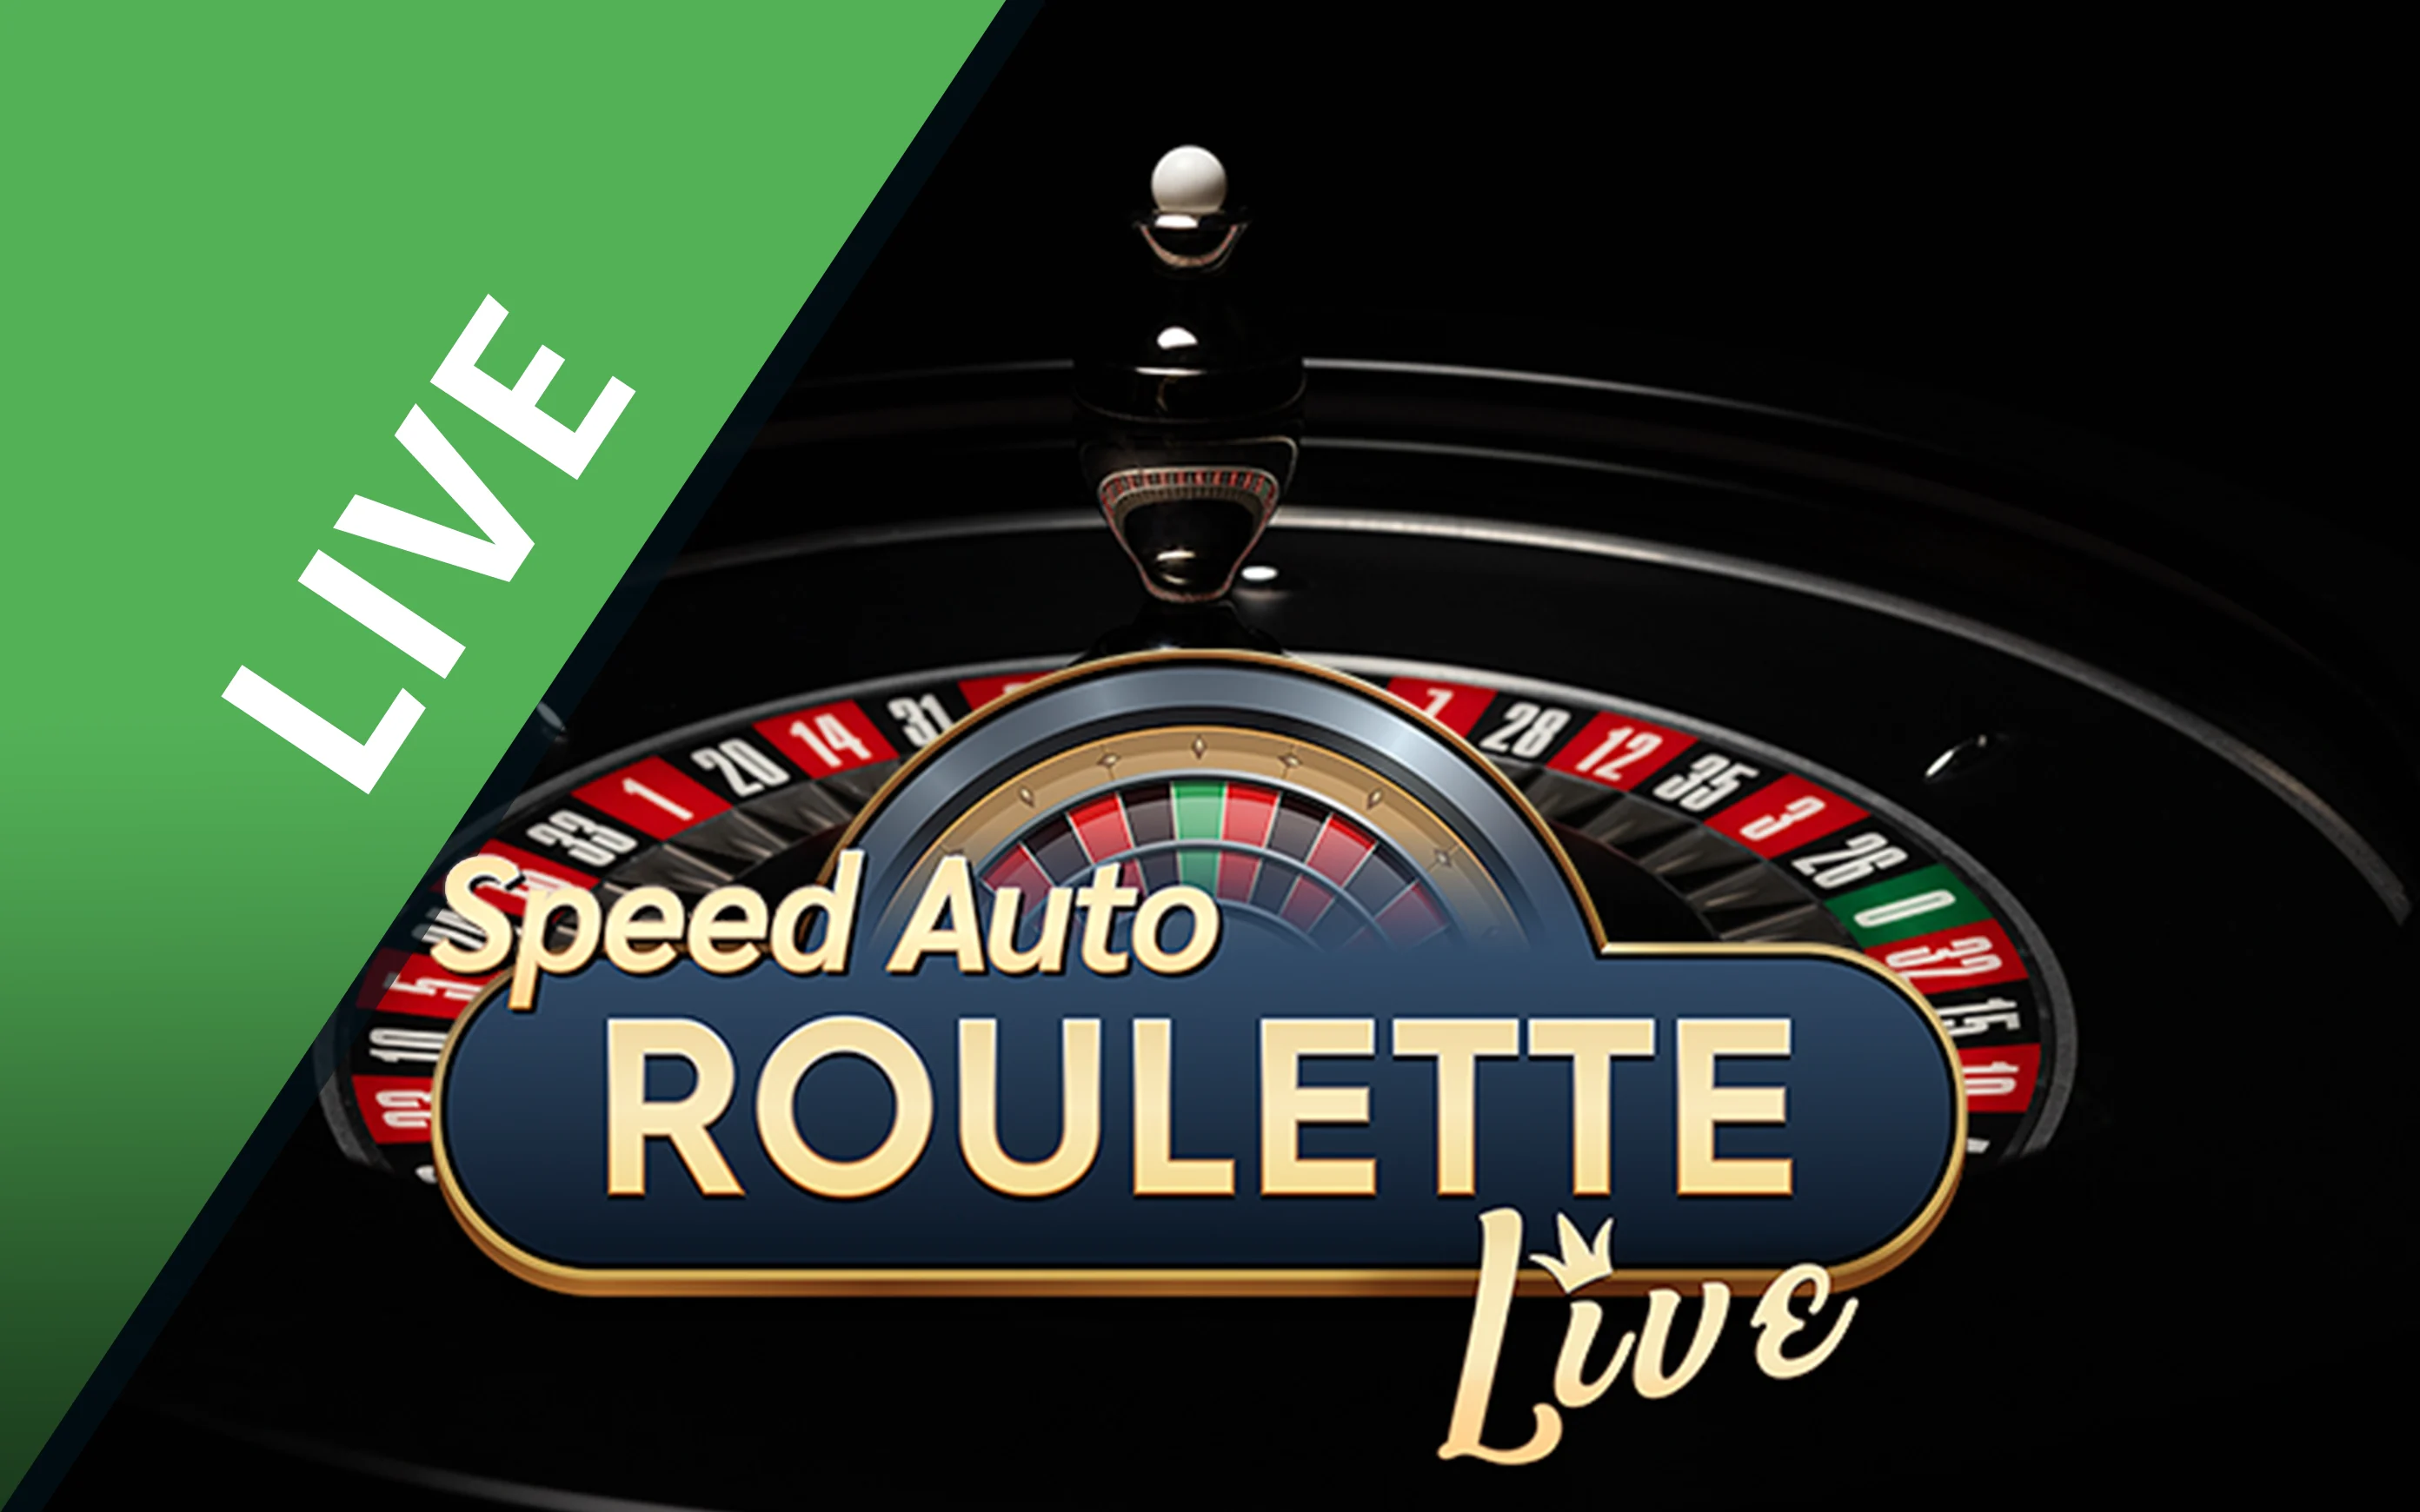 Starcasino.be online casino üzerinden Speed Auto Roulette oynayın